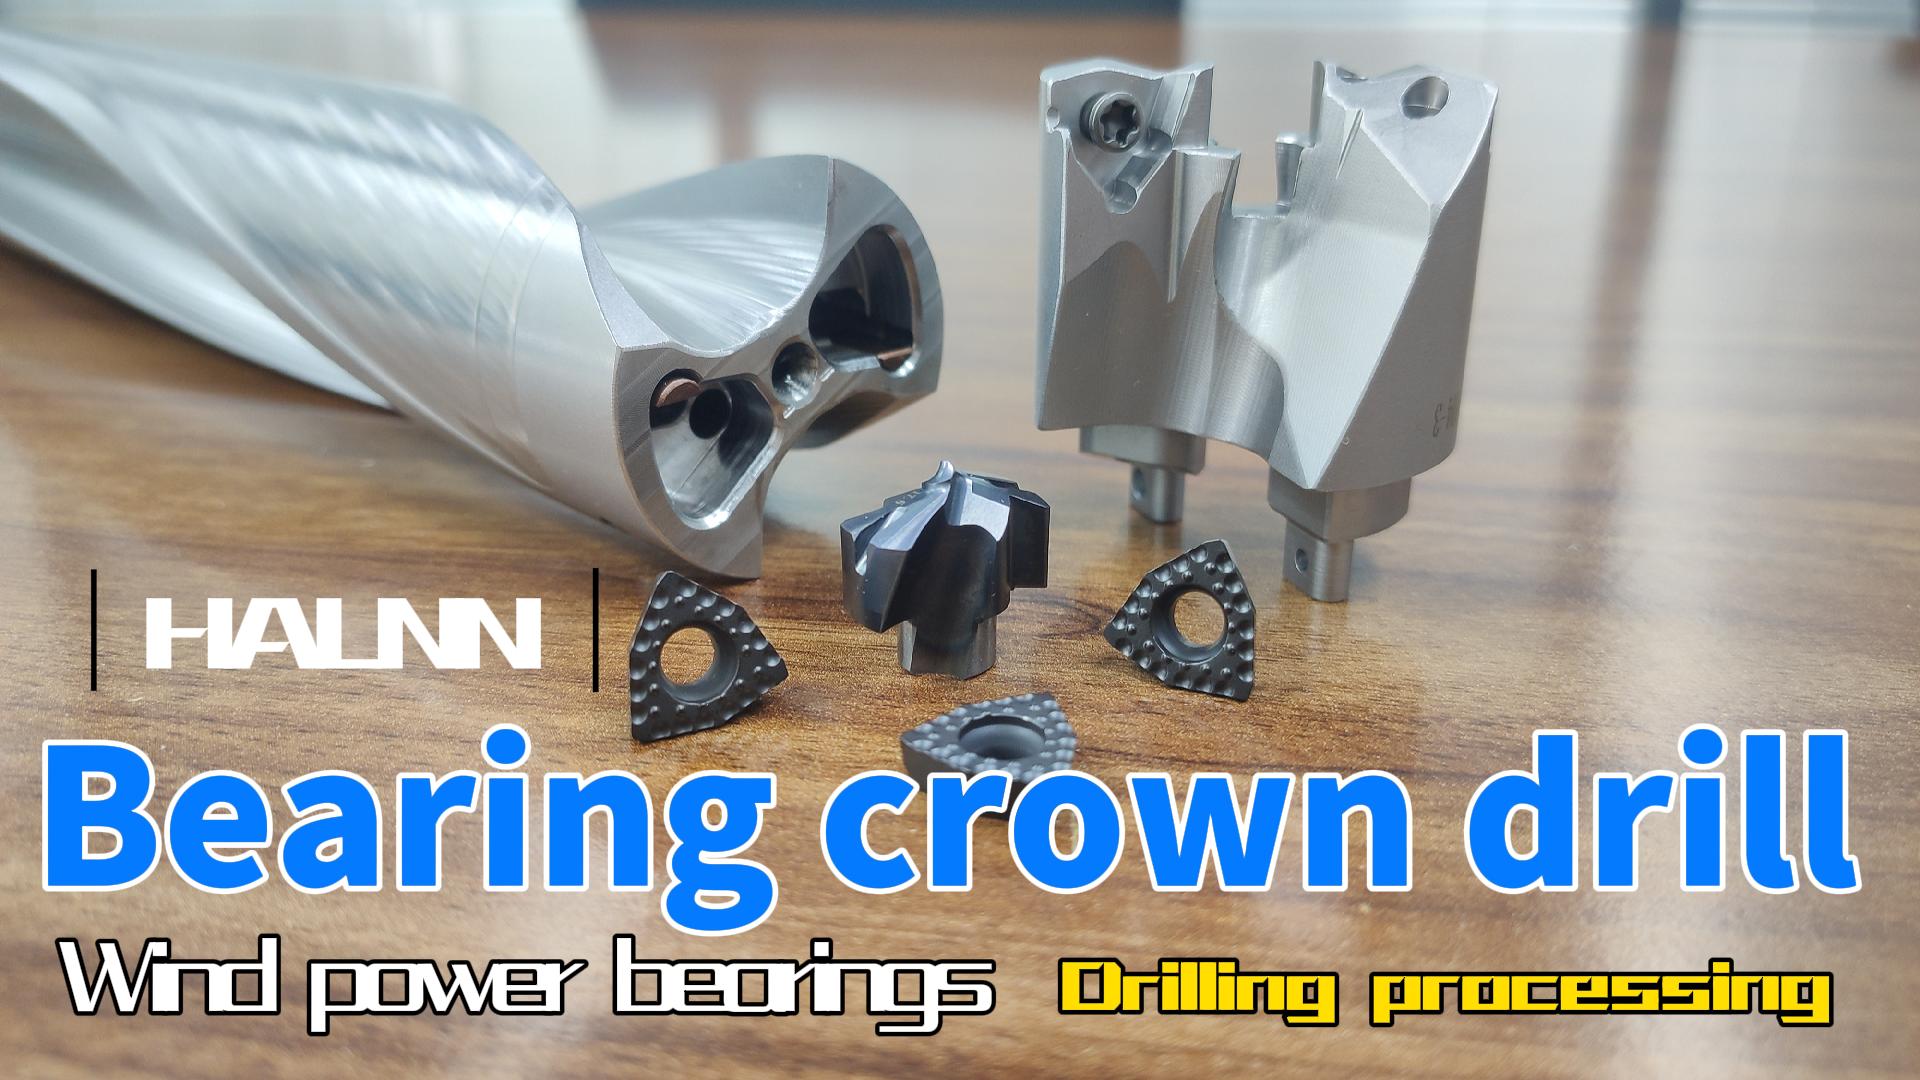 Machining wind turbine bearing bore with Halnn crown drill!